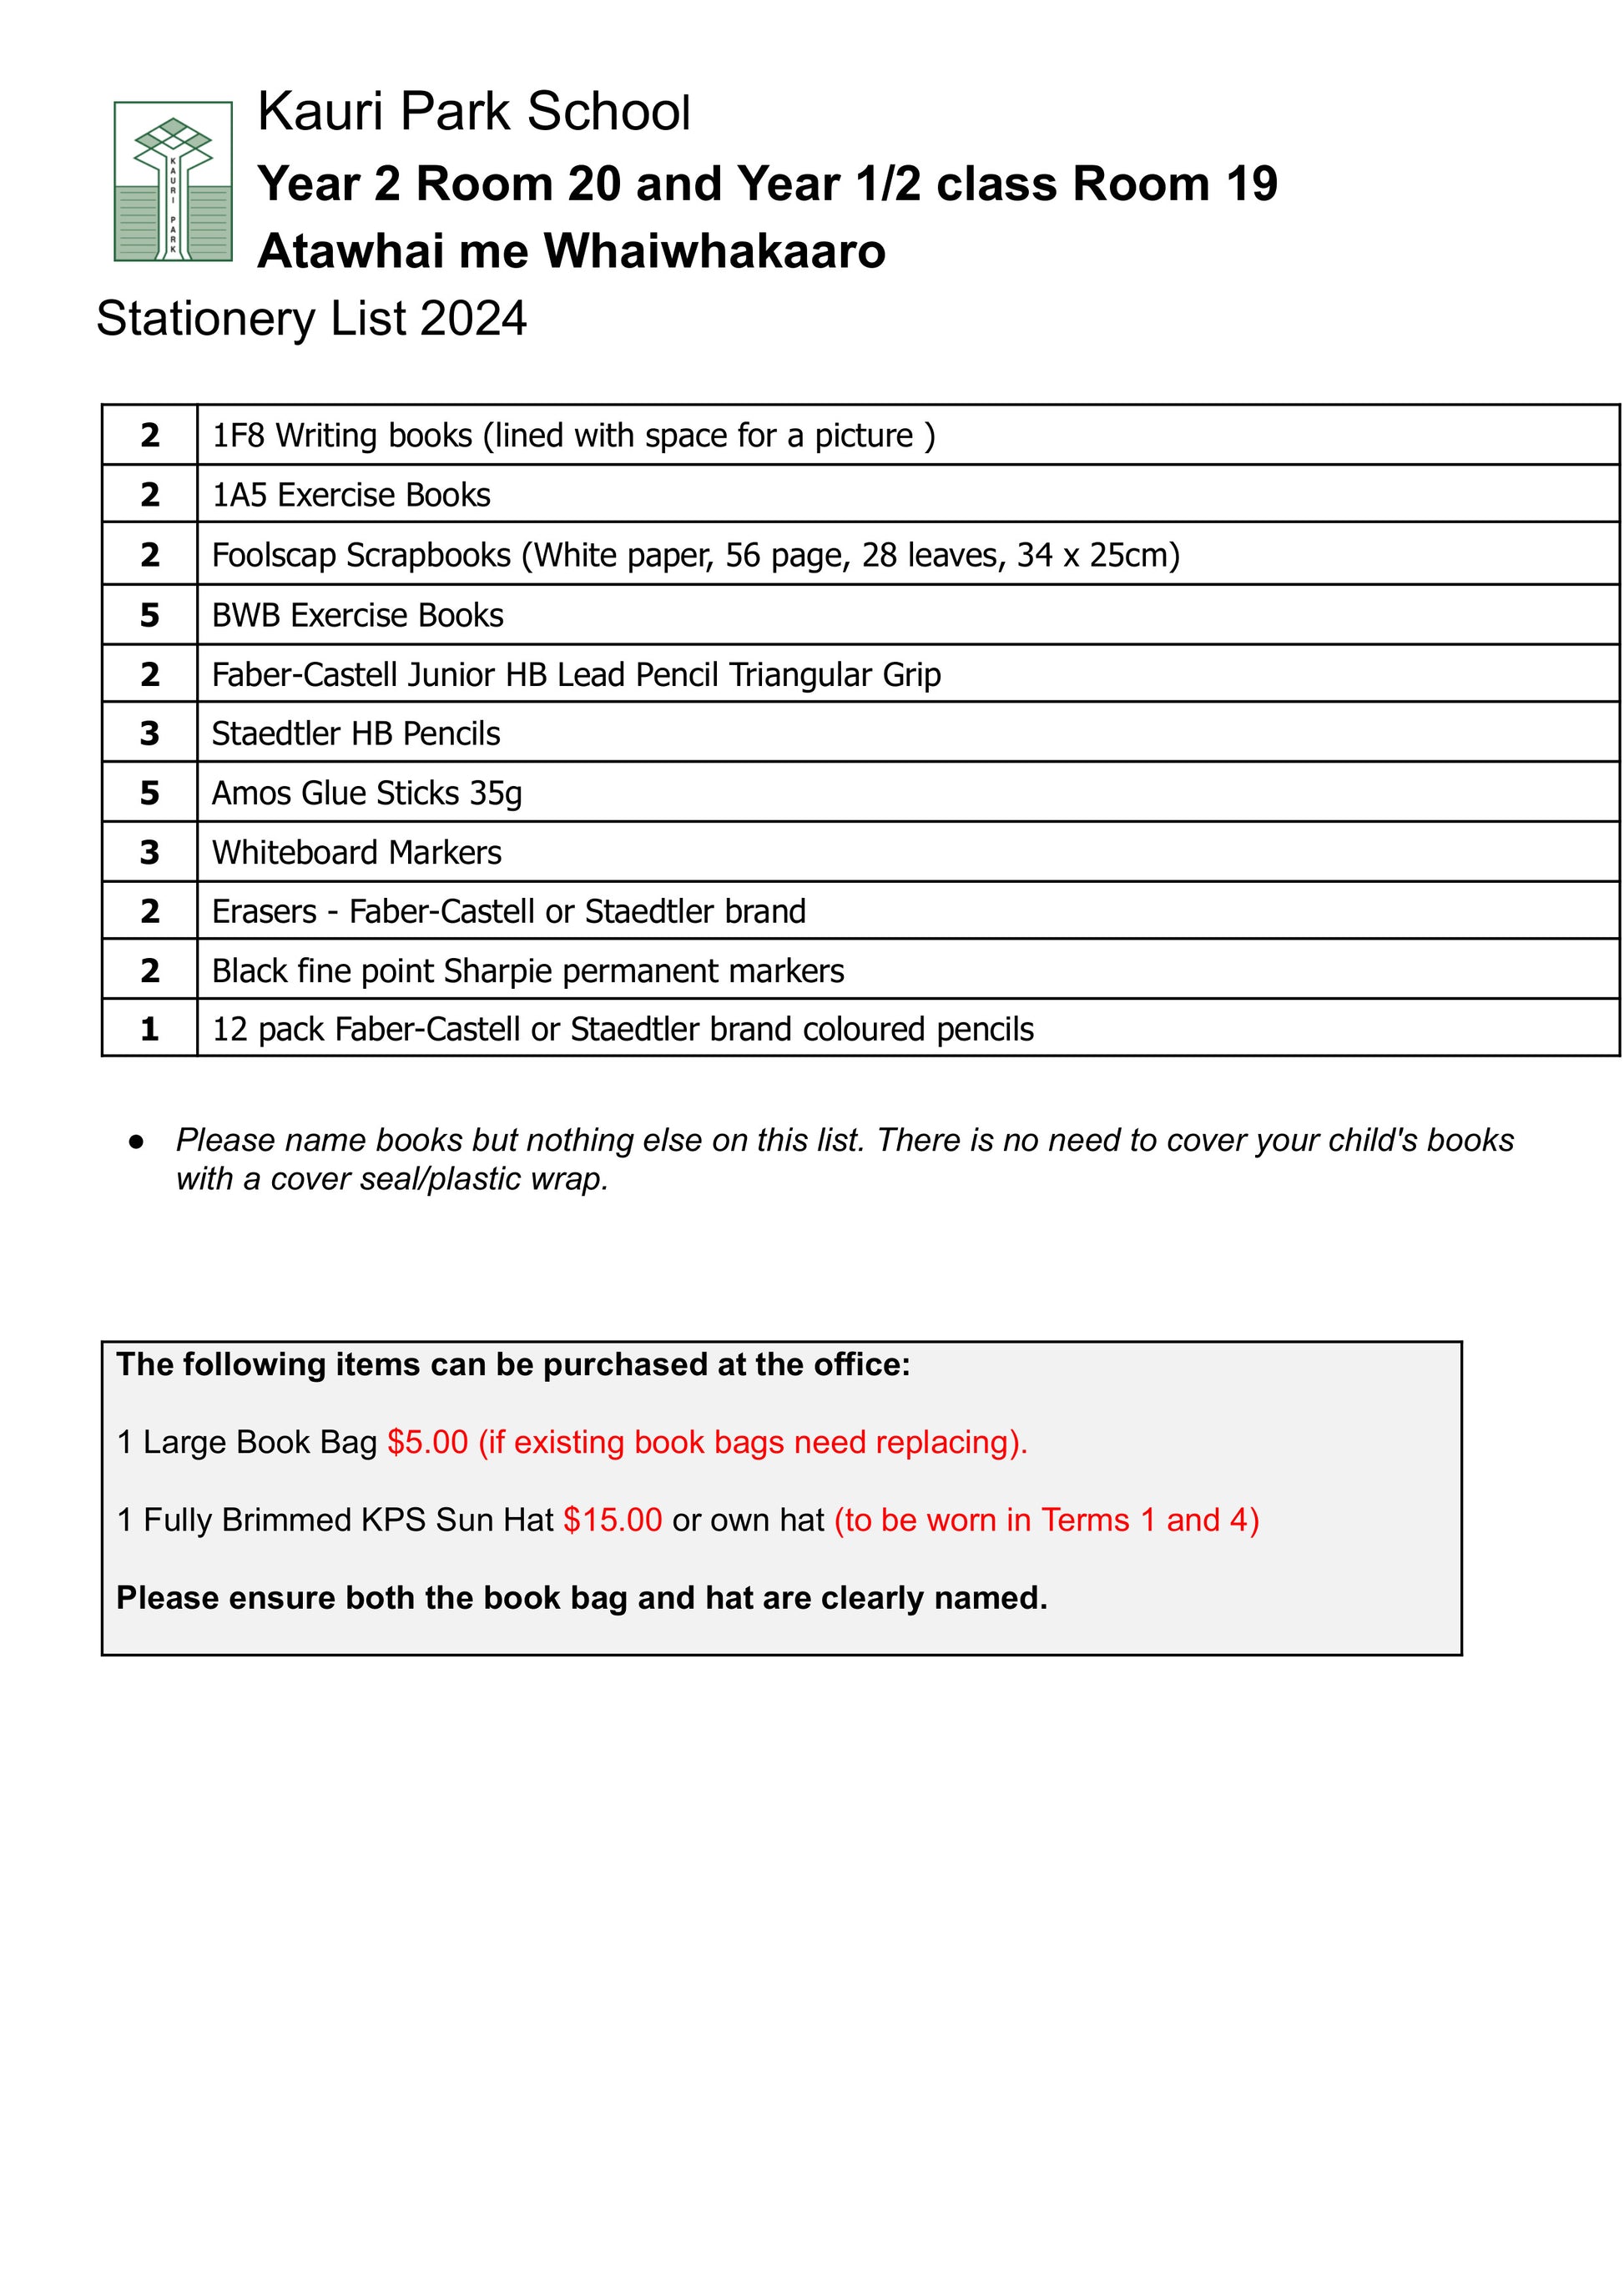 Kauri Park School Stationery List 2024 Year 2